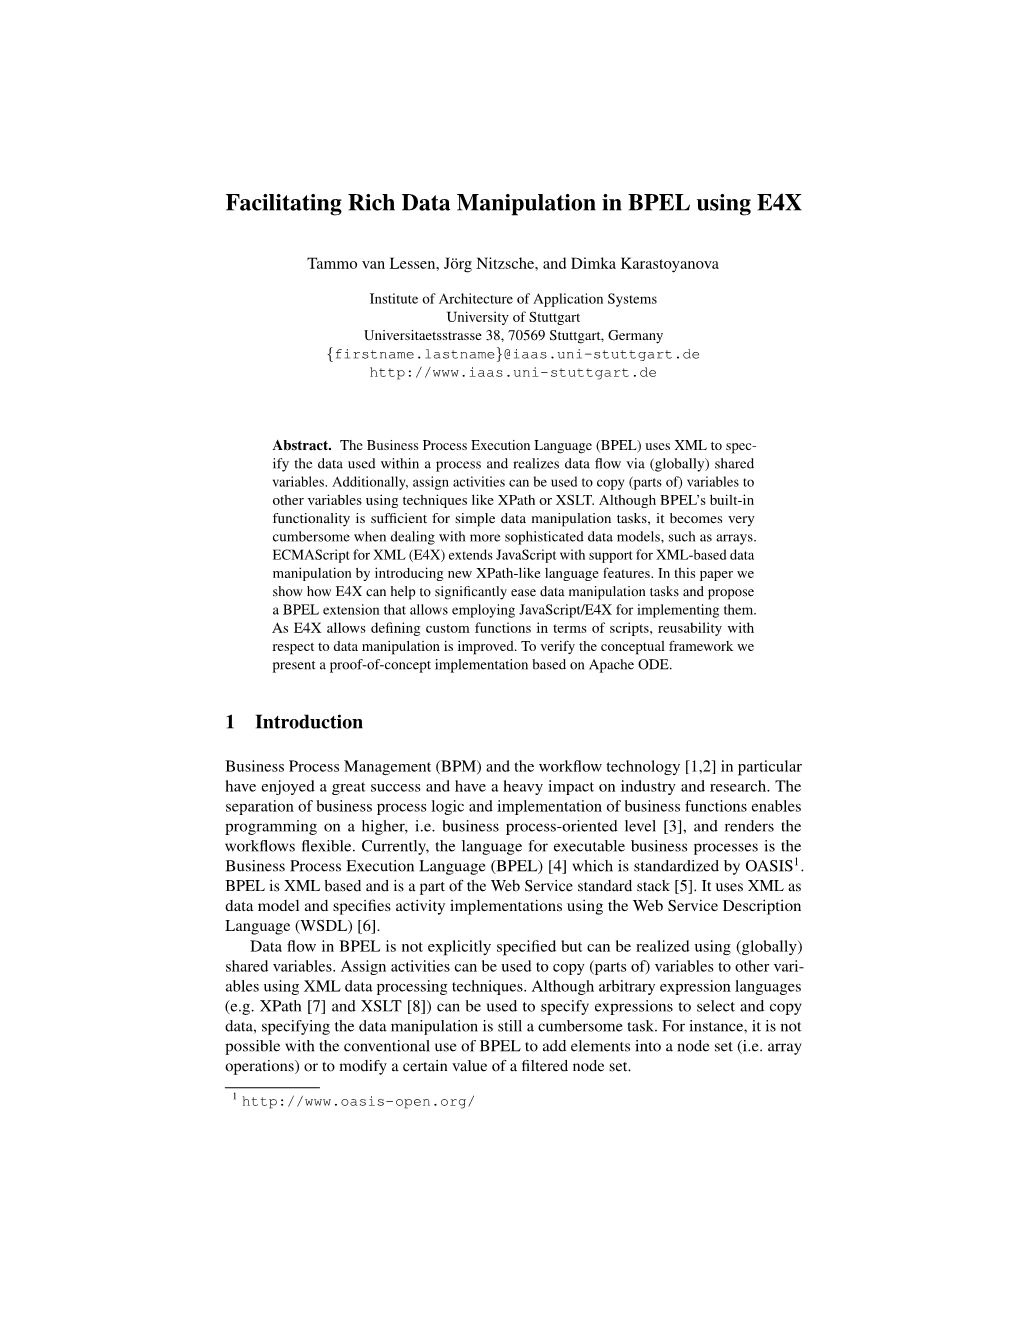 Facilitating Rich Data Manipulation in BPEL Using E4X)